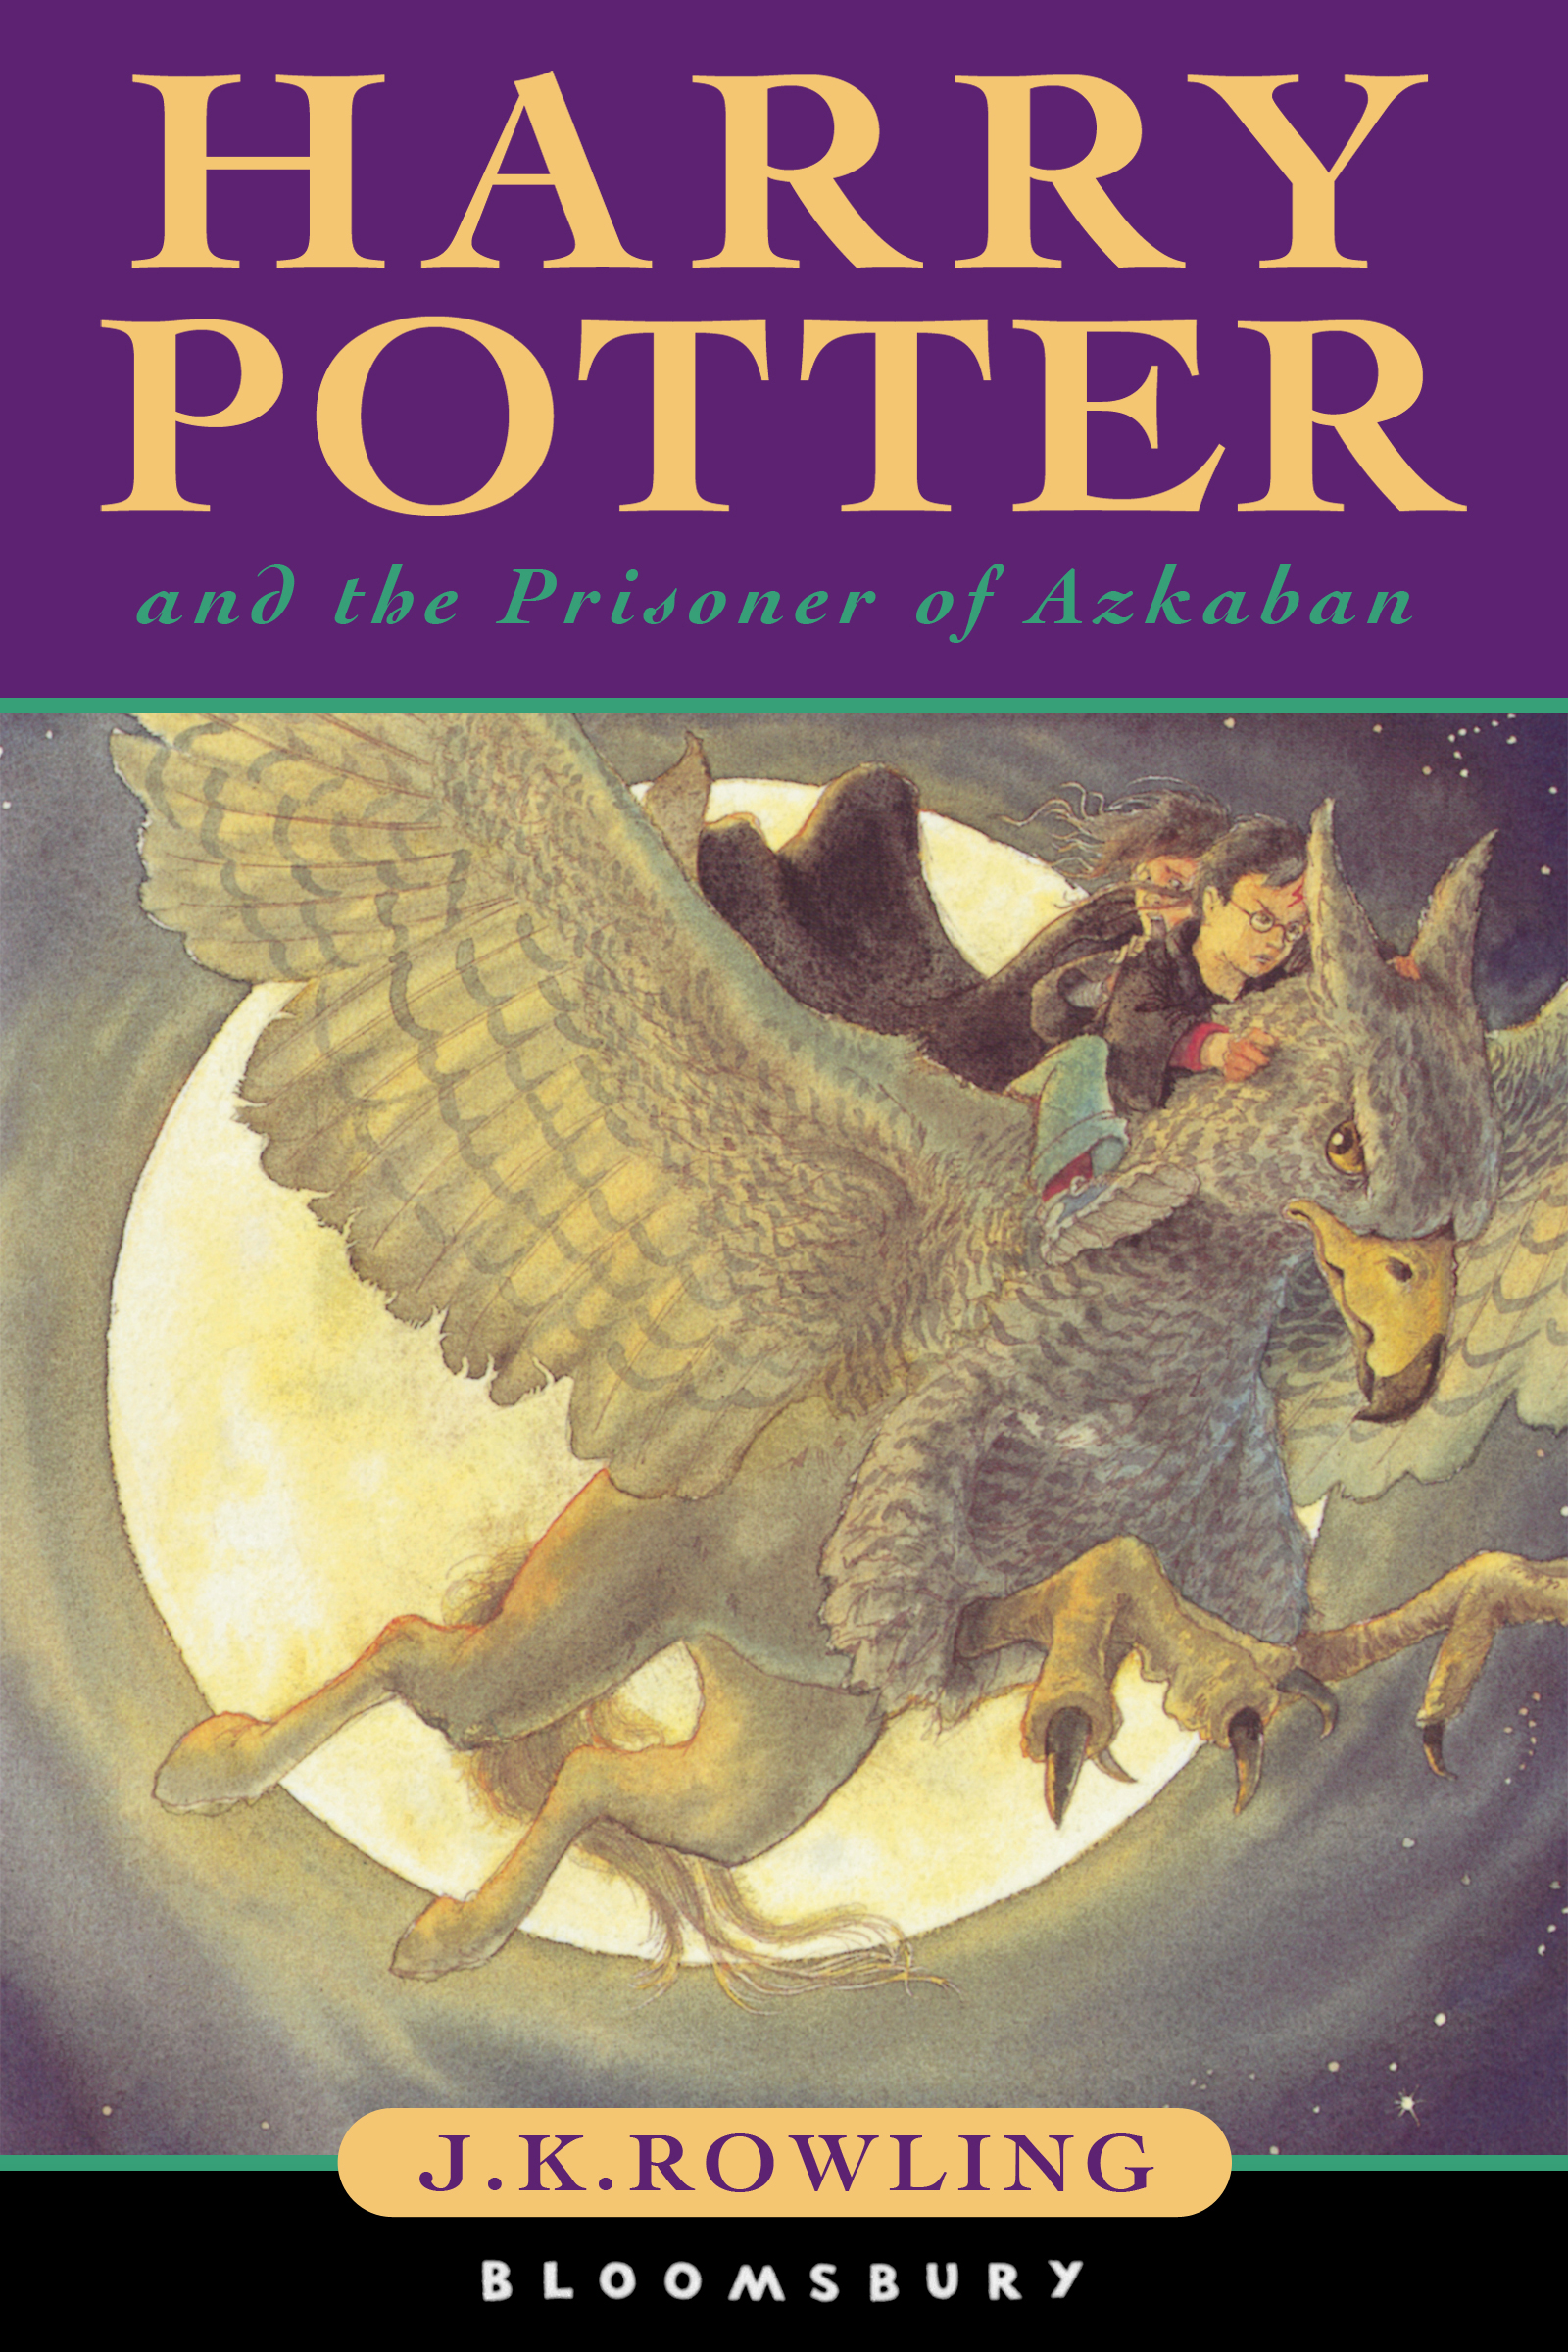 harry potter order of the phoenix audiobook free